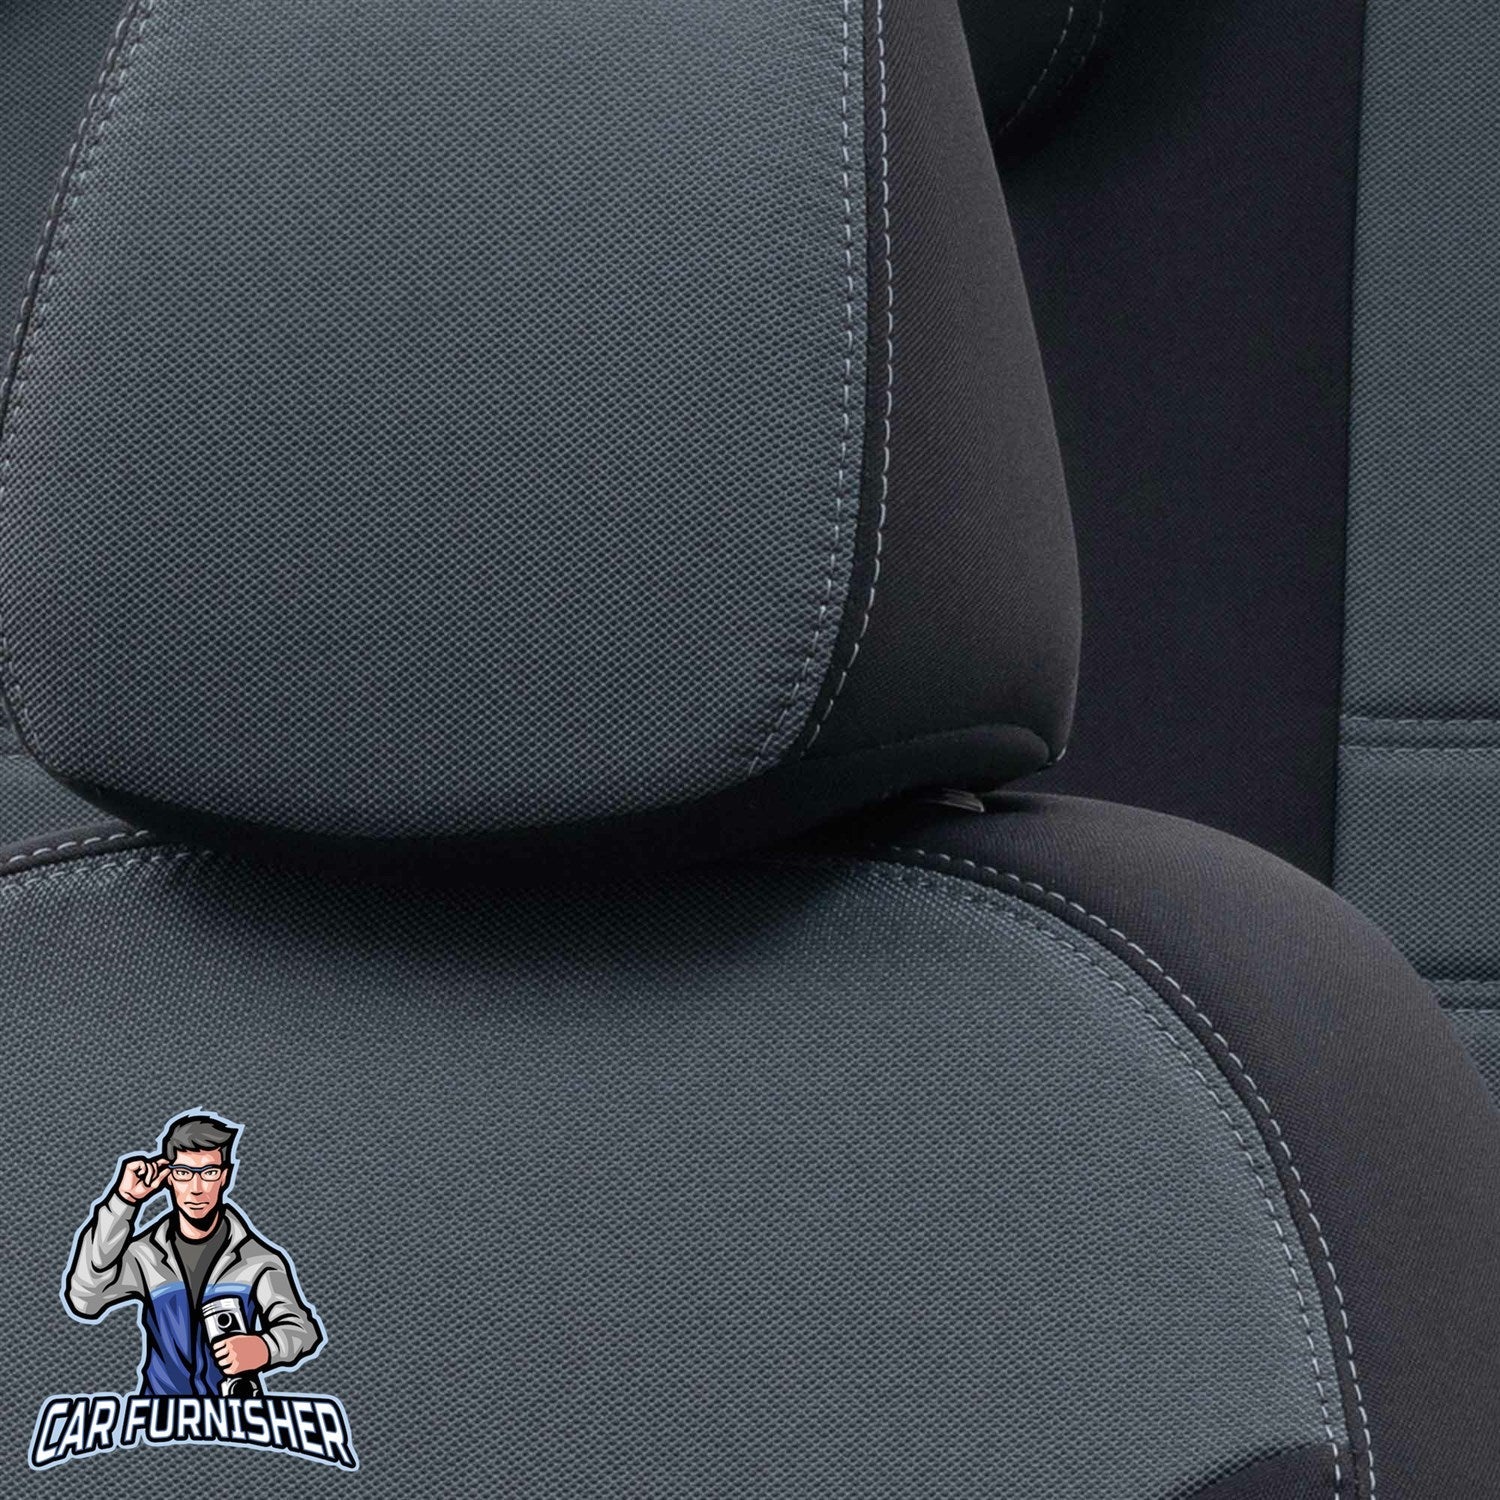 Mitsubishi Canter Seat Covers Original Jacquard Design Smoked Black Jacquard Fabric